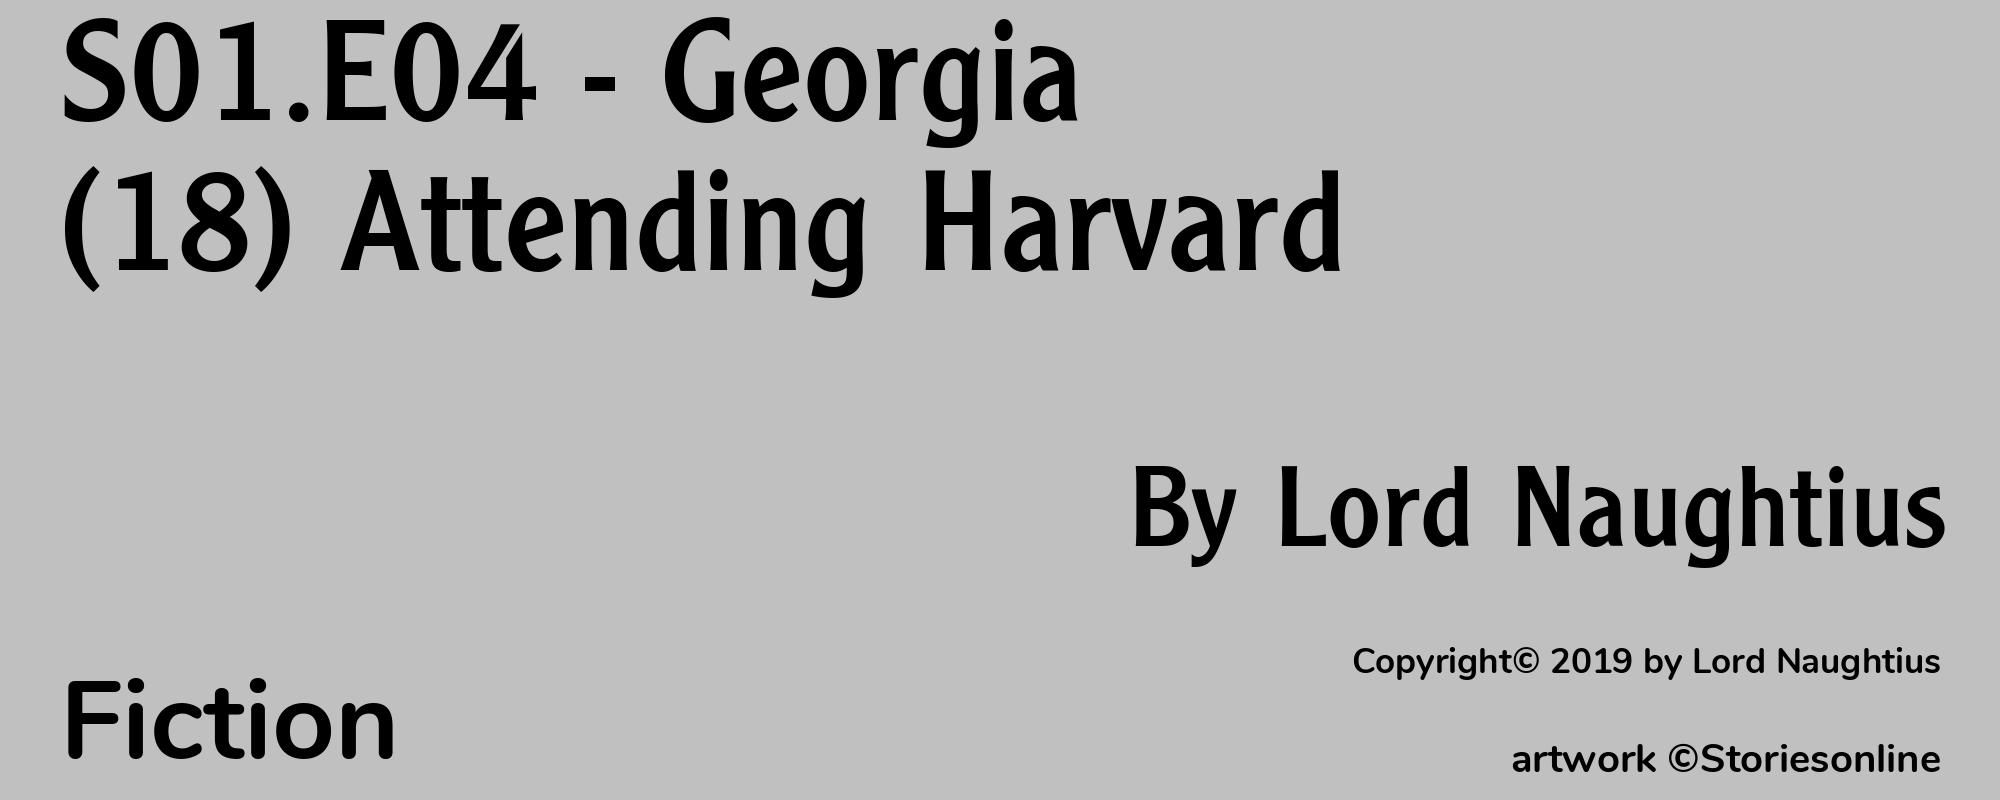 S01.E04 - Georgia(18) Attending Harvard - Cover